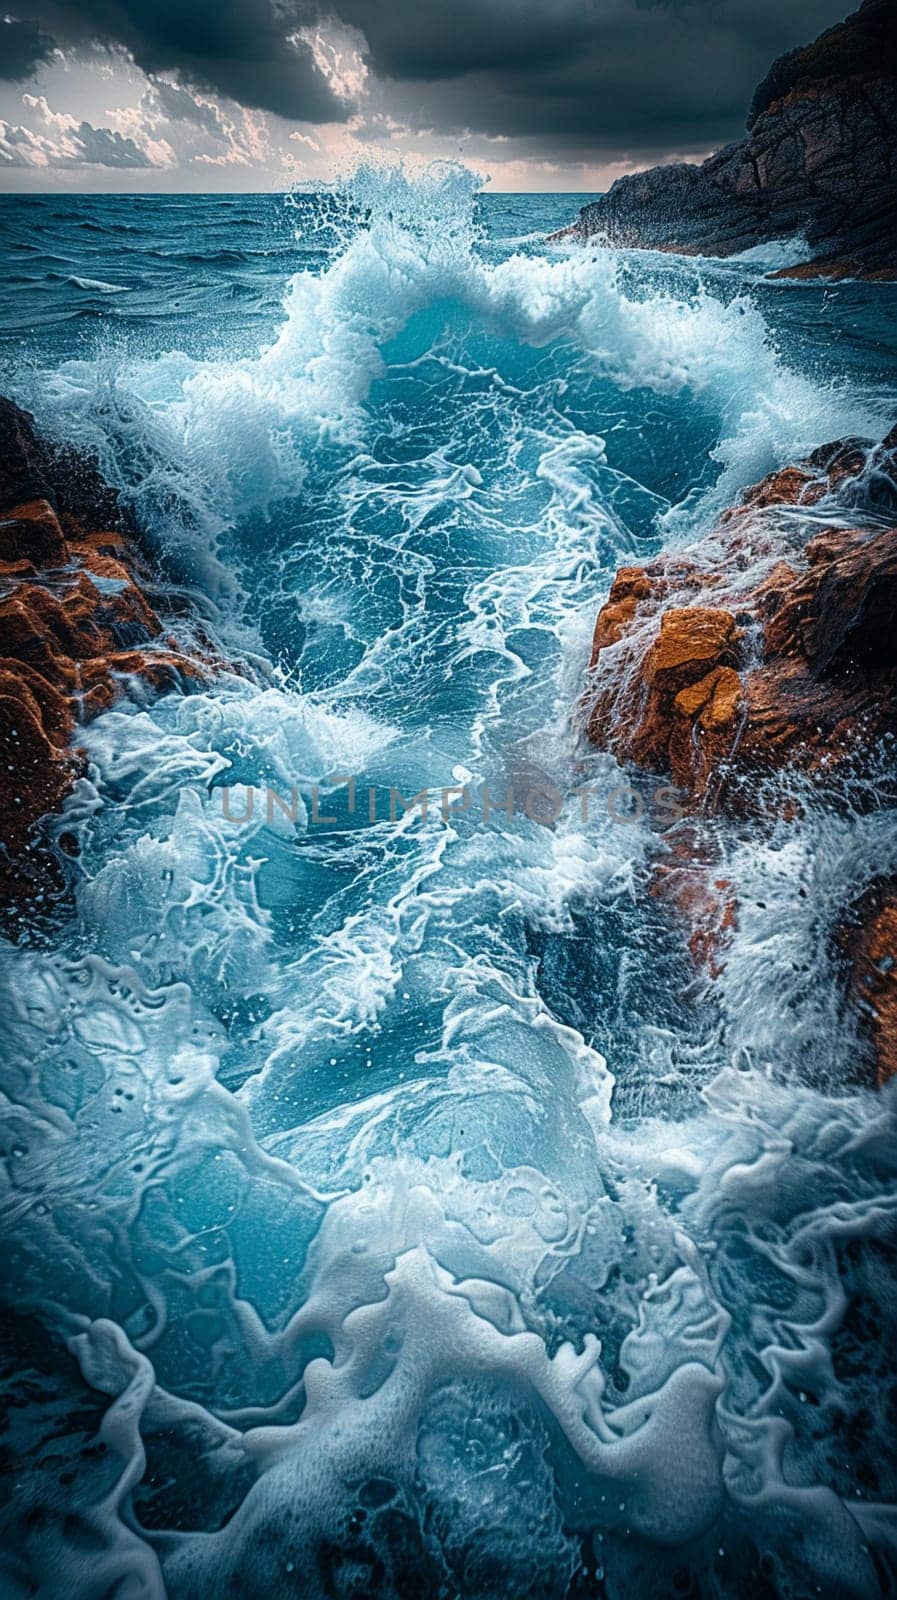 Crashing waves on a rocky coastline under a stormy sky, symbolizing nature's power and beauty.